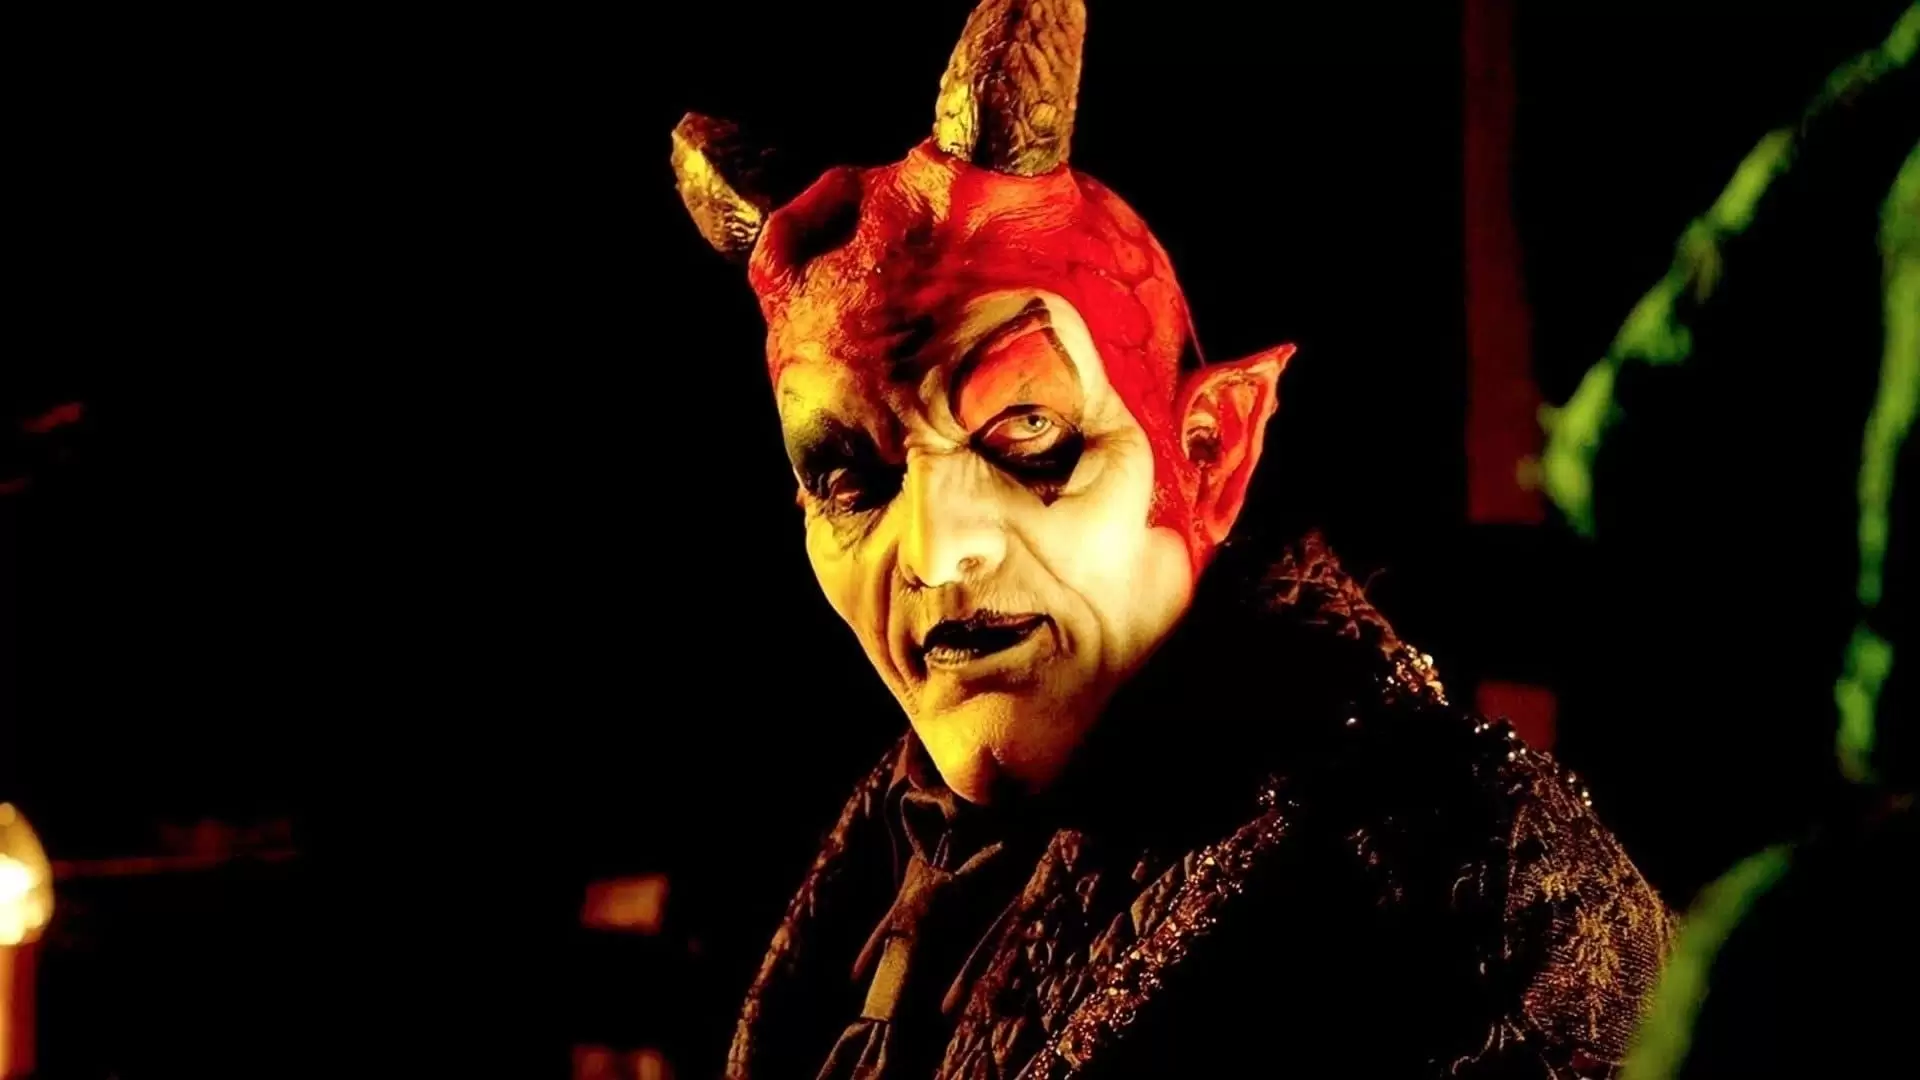 دانلود فیلم The Devil’s Carnival 2012 (کارناوال شیطان)